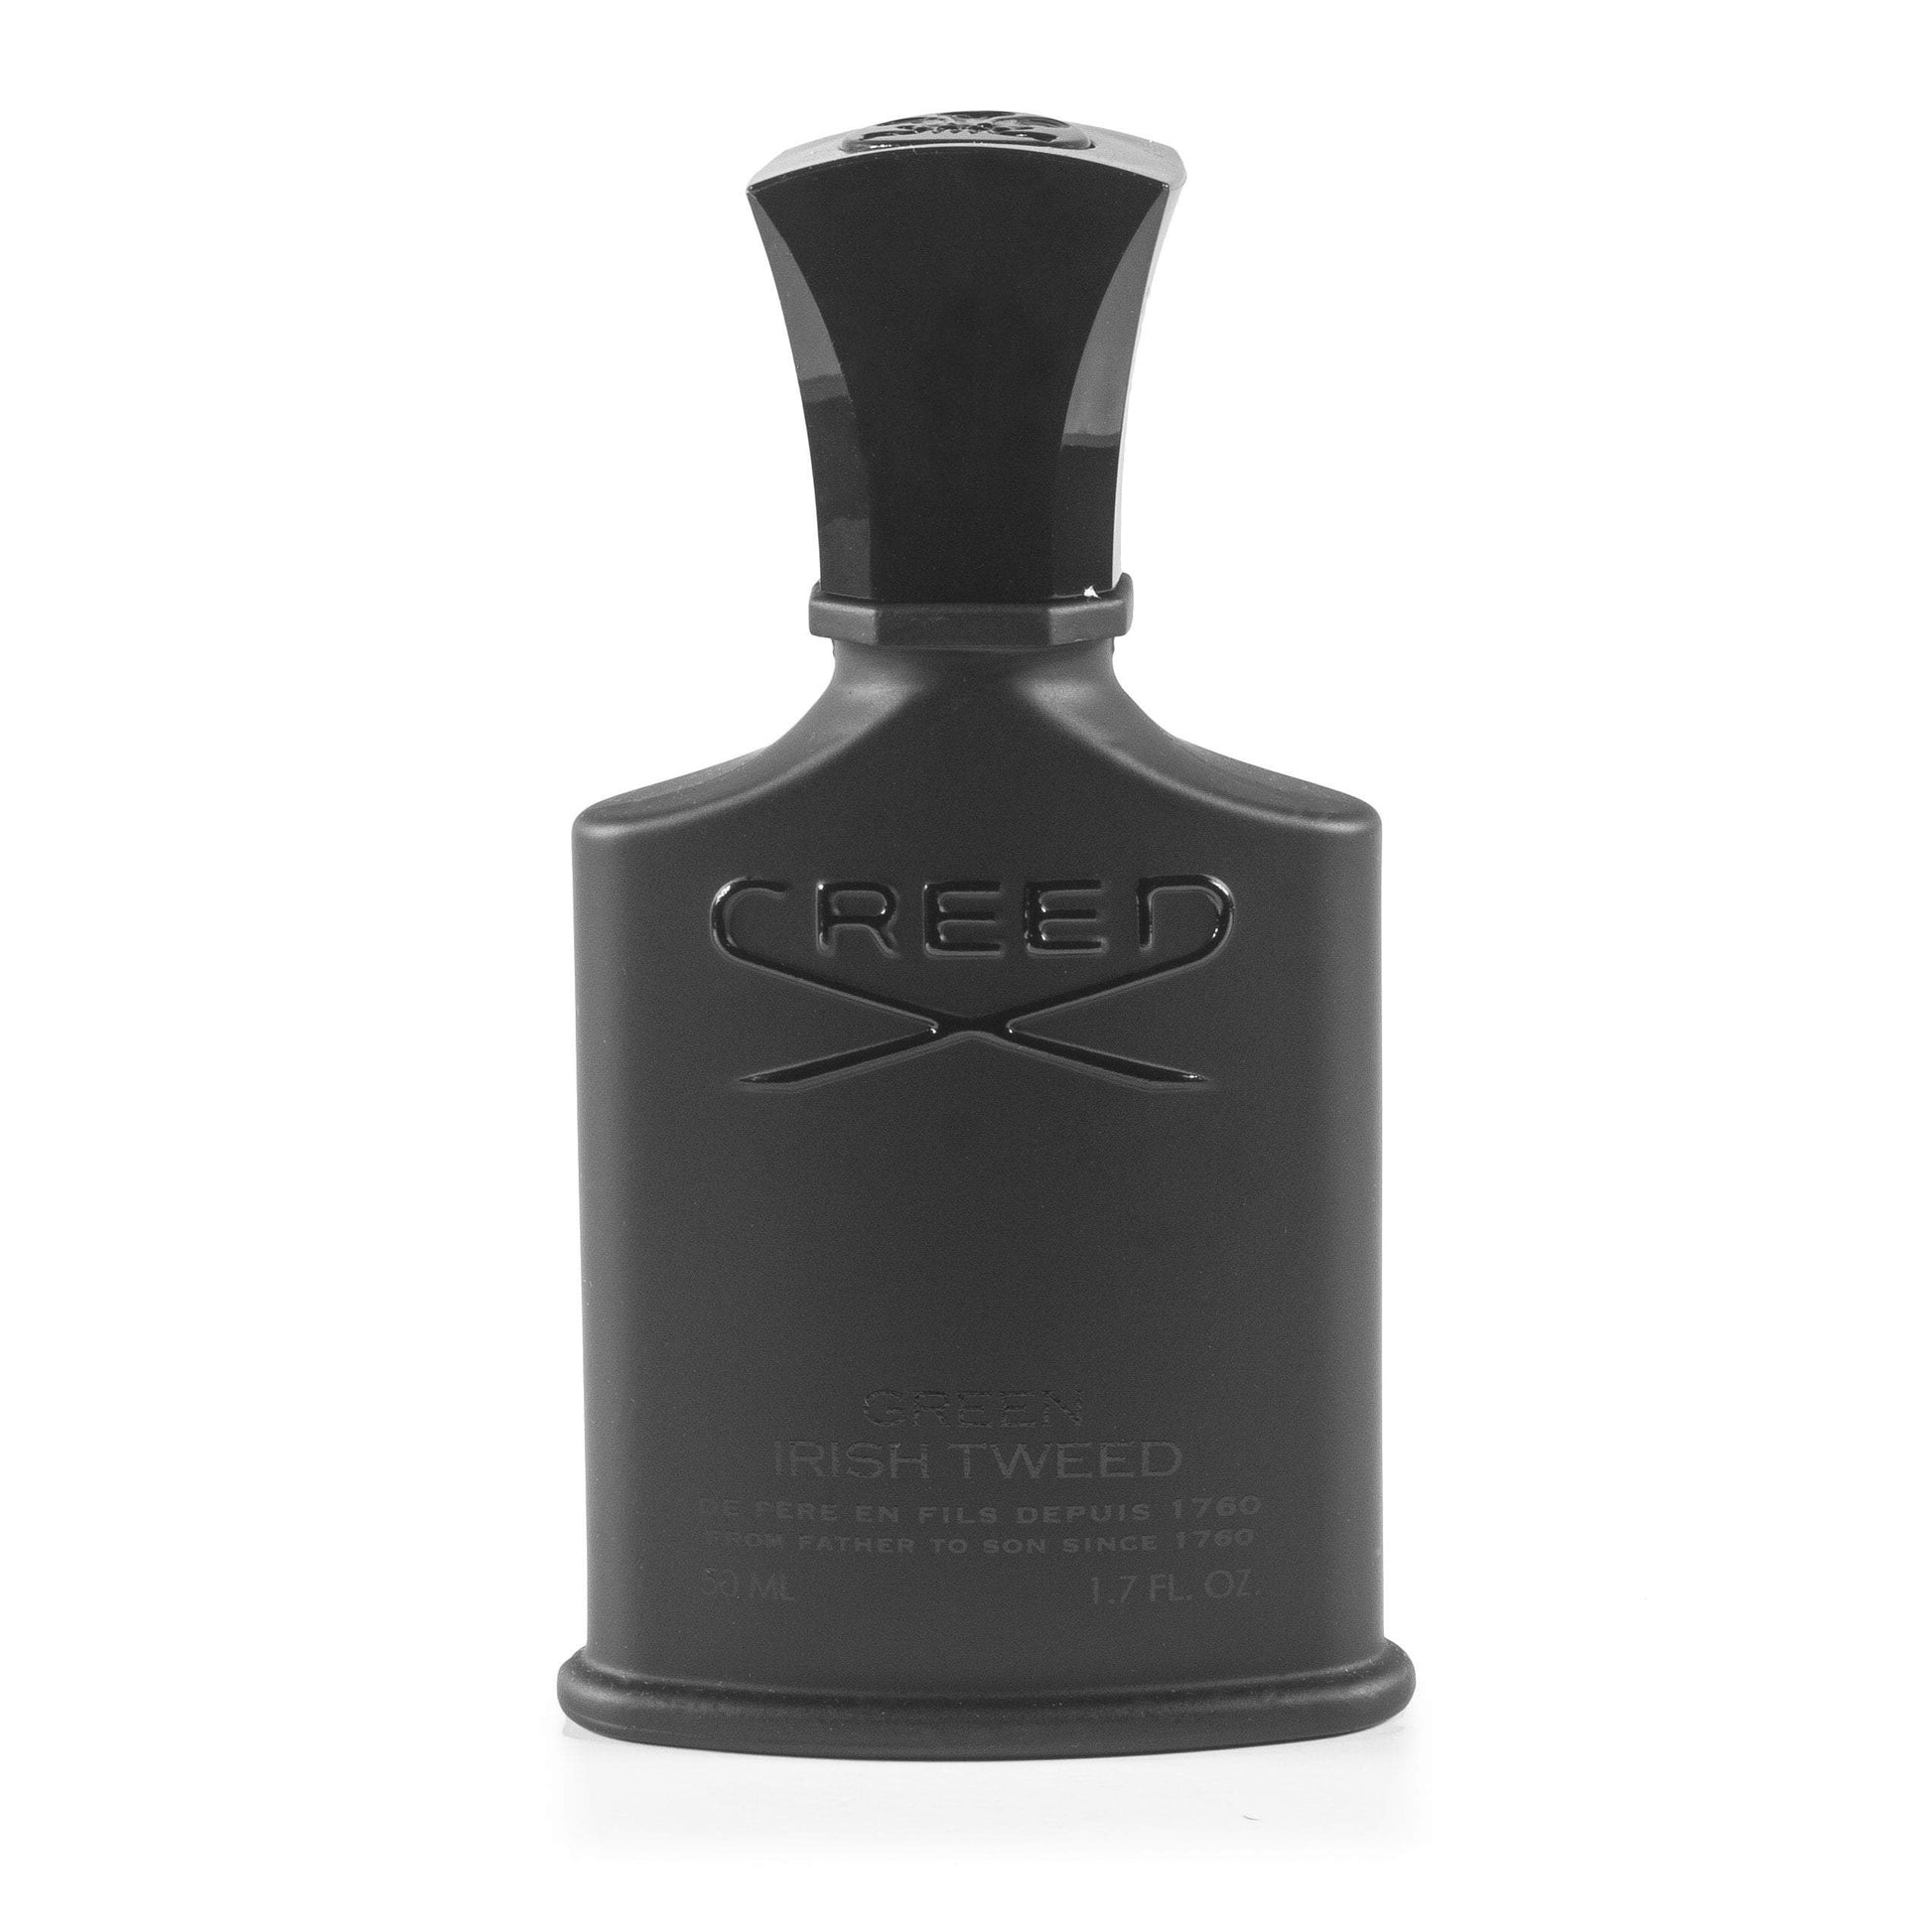 Green Irish Tweed Eau de Parfum Spray for Men by Creed, Product image 5